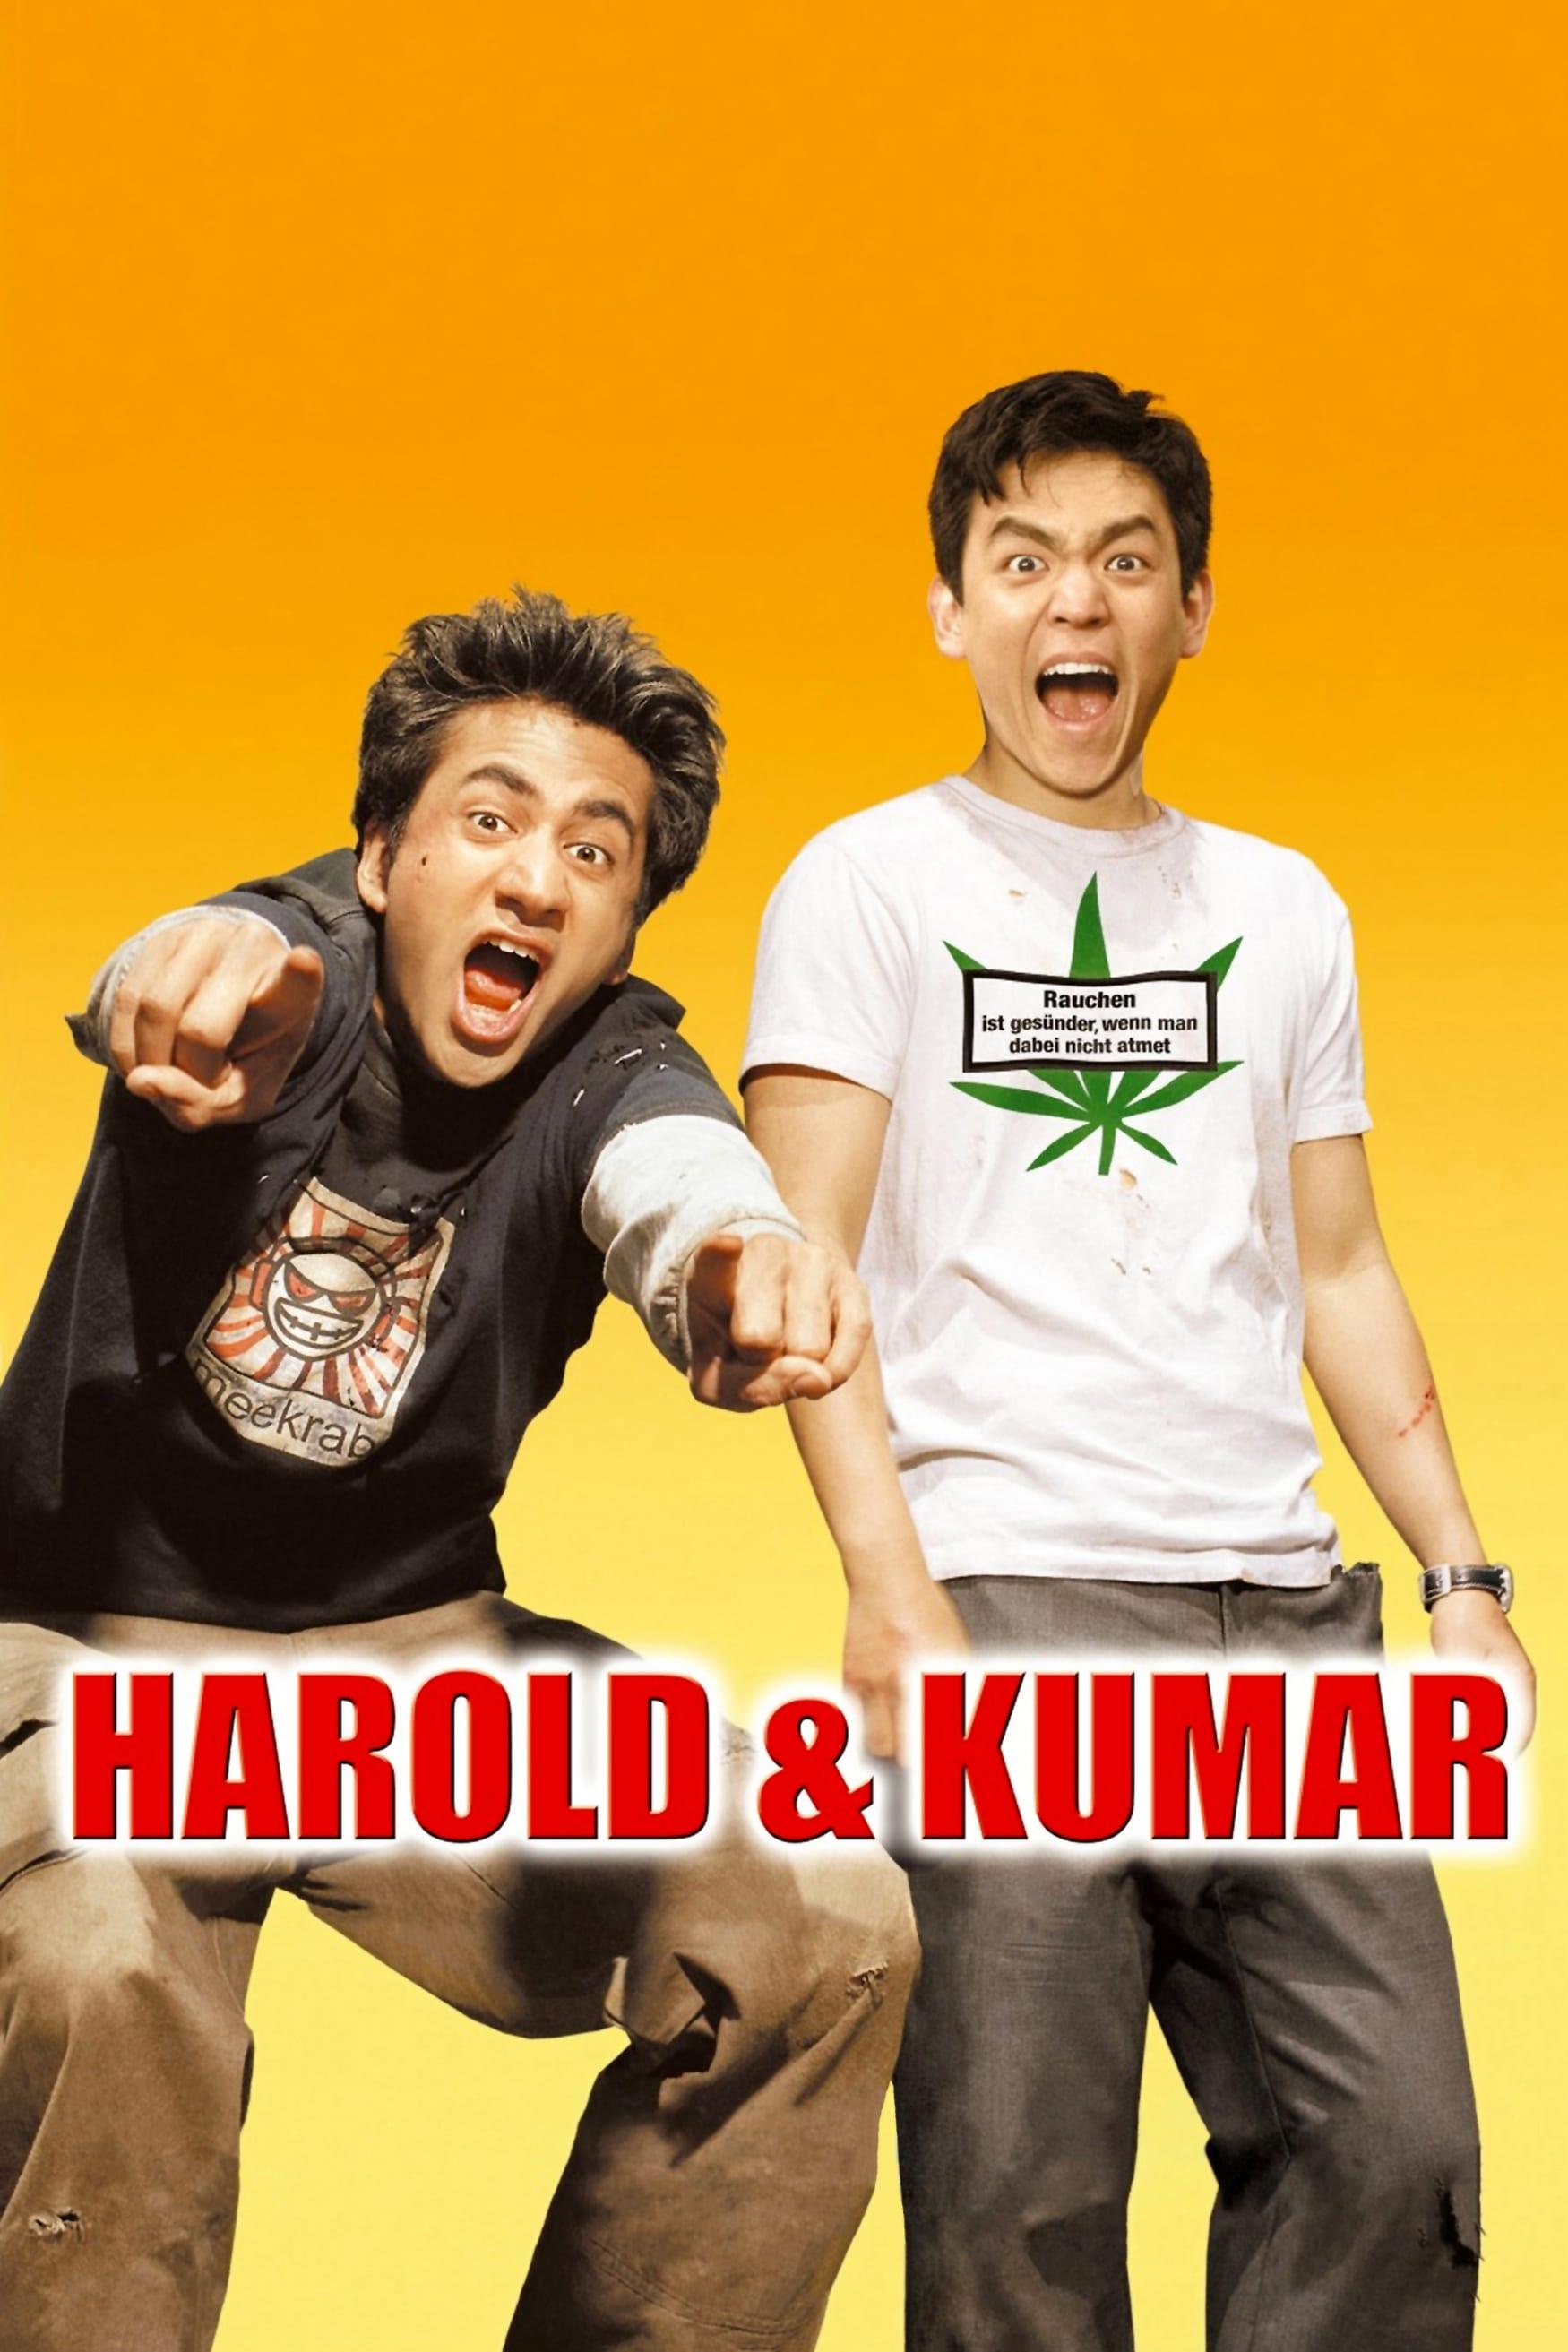 Harold & Kumar poster